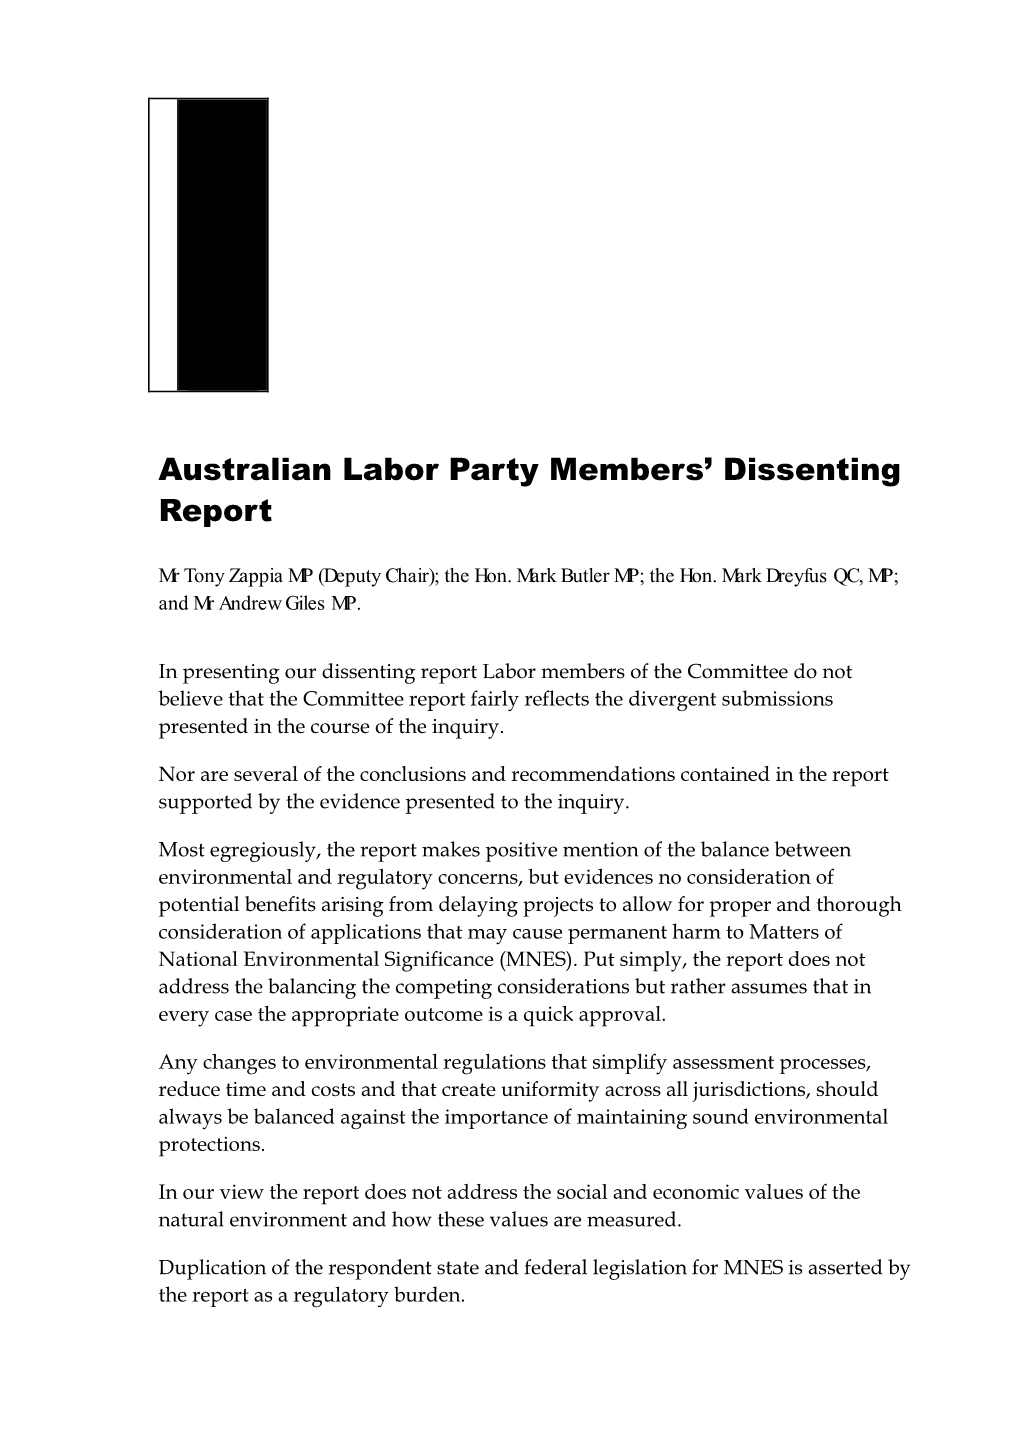 Australian Labor Party Members' Dissenting Report